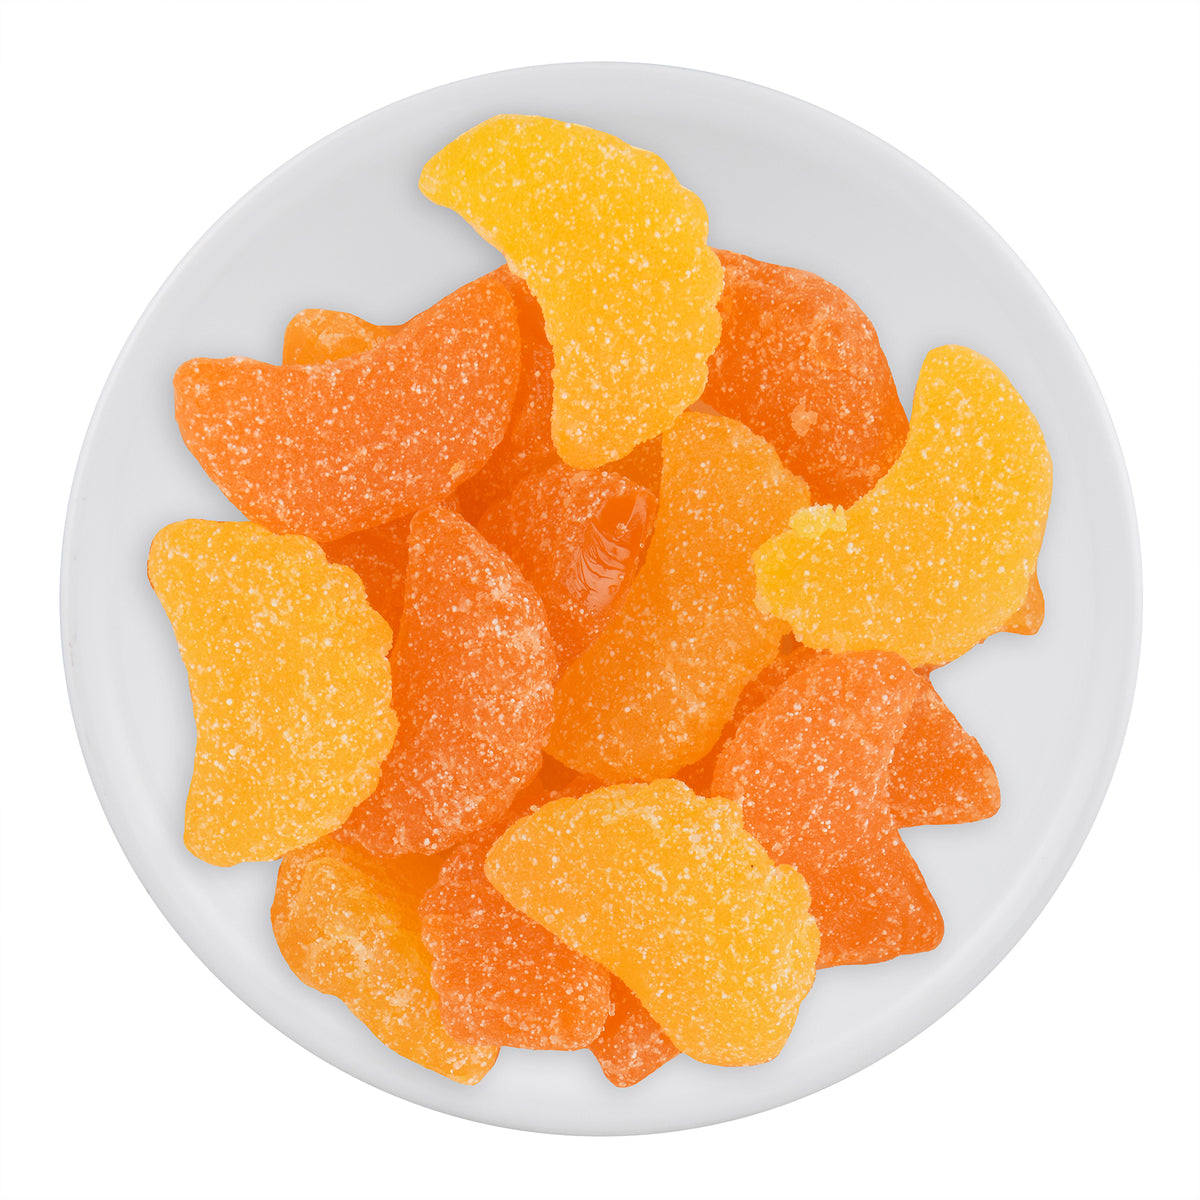 Orange and Lemon Slices Jumbo Pack - 1Kg